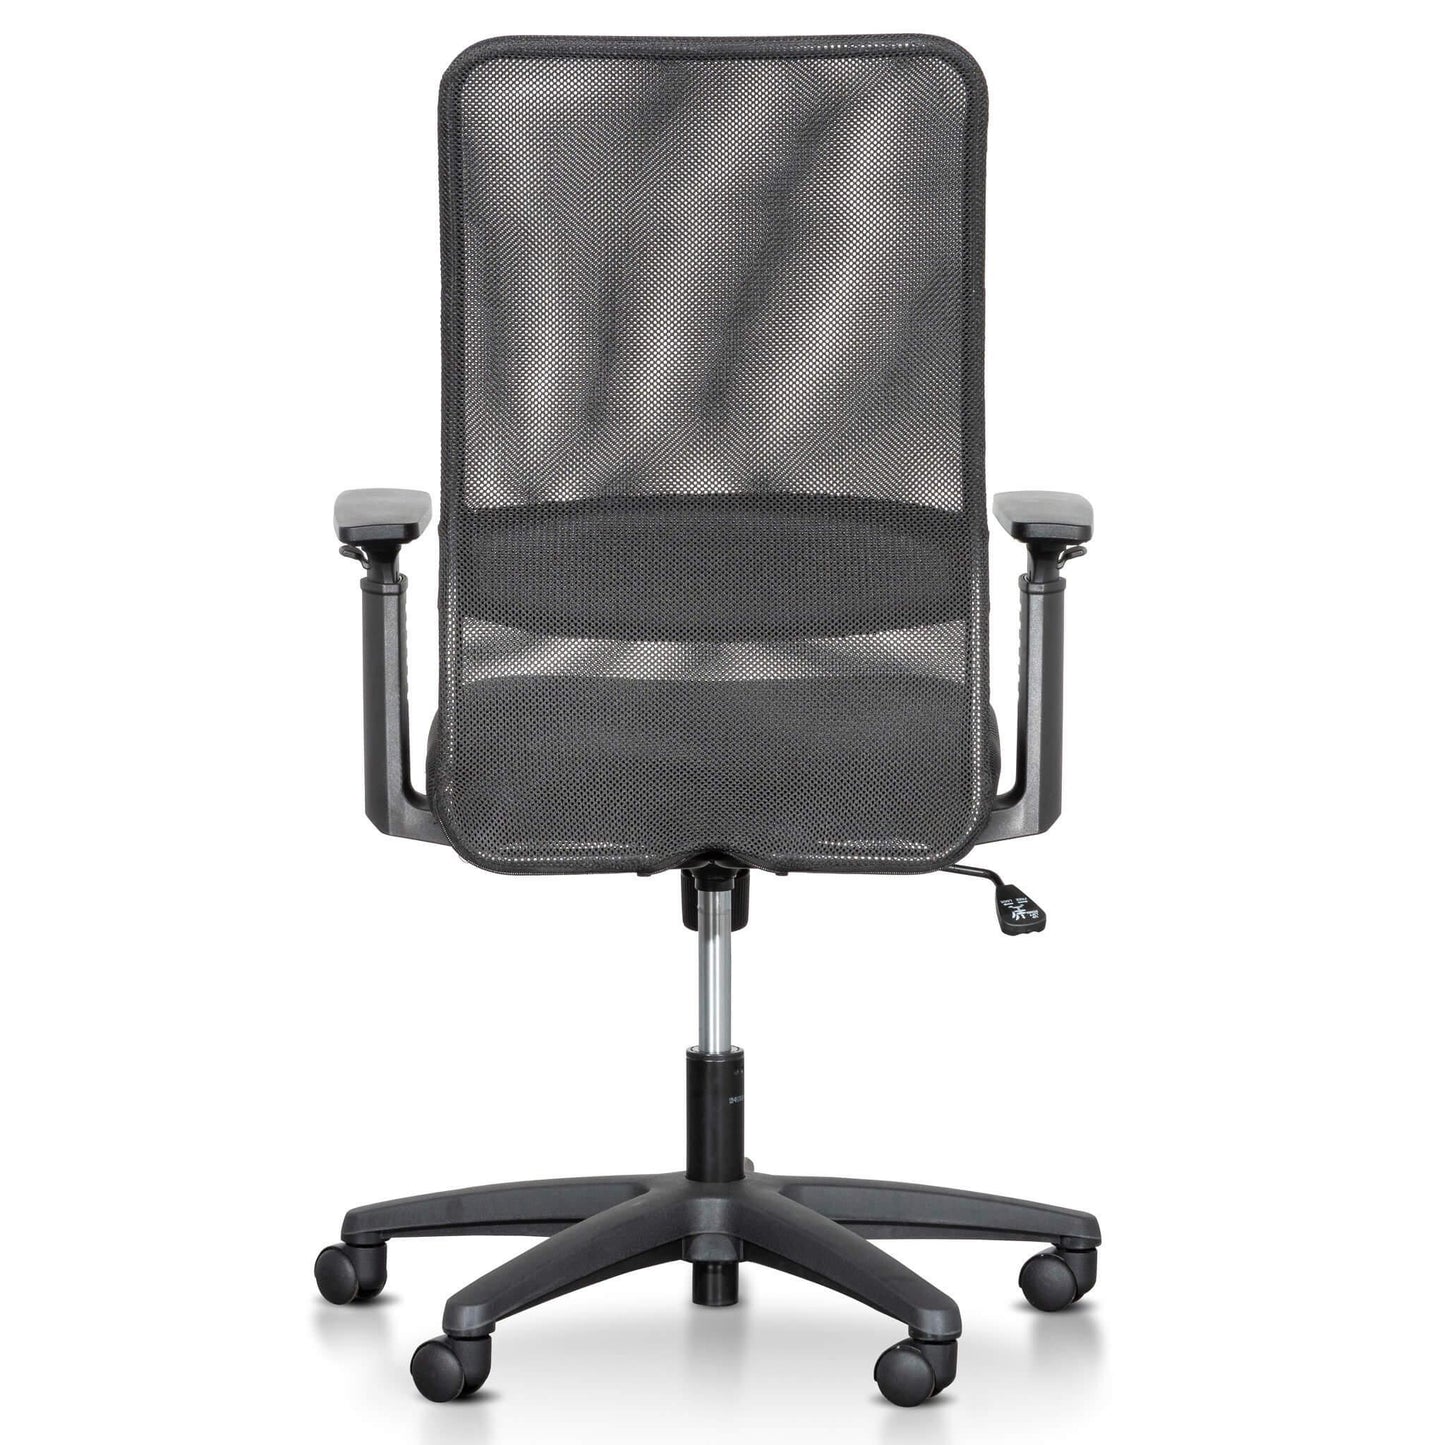 Calibre Mesh Office Chair - Black OC6240-UN - Office/Gaming ChairsOC6240-UN 5